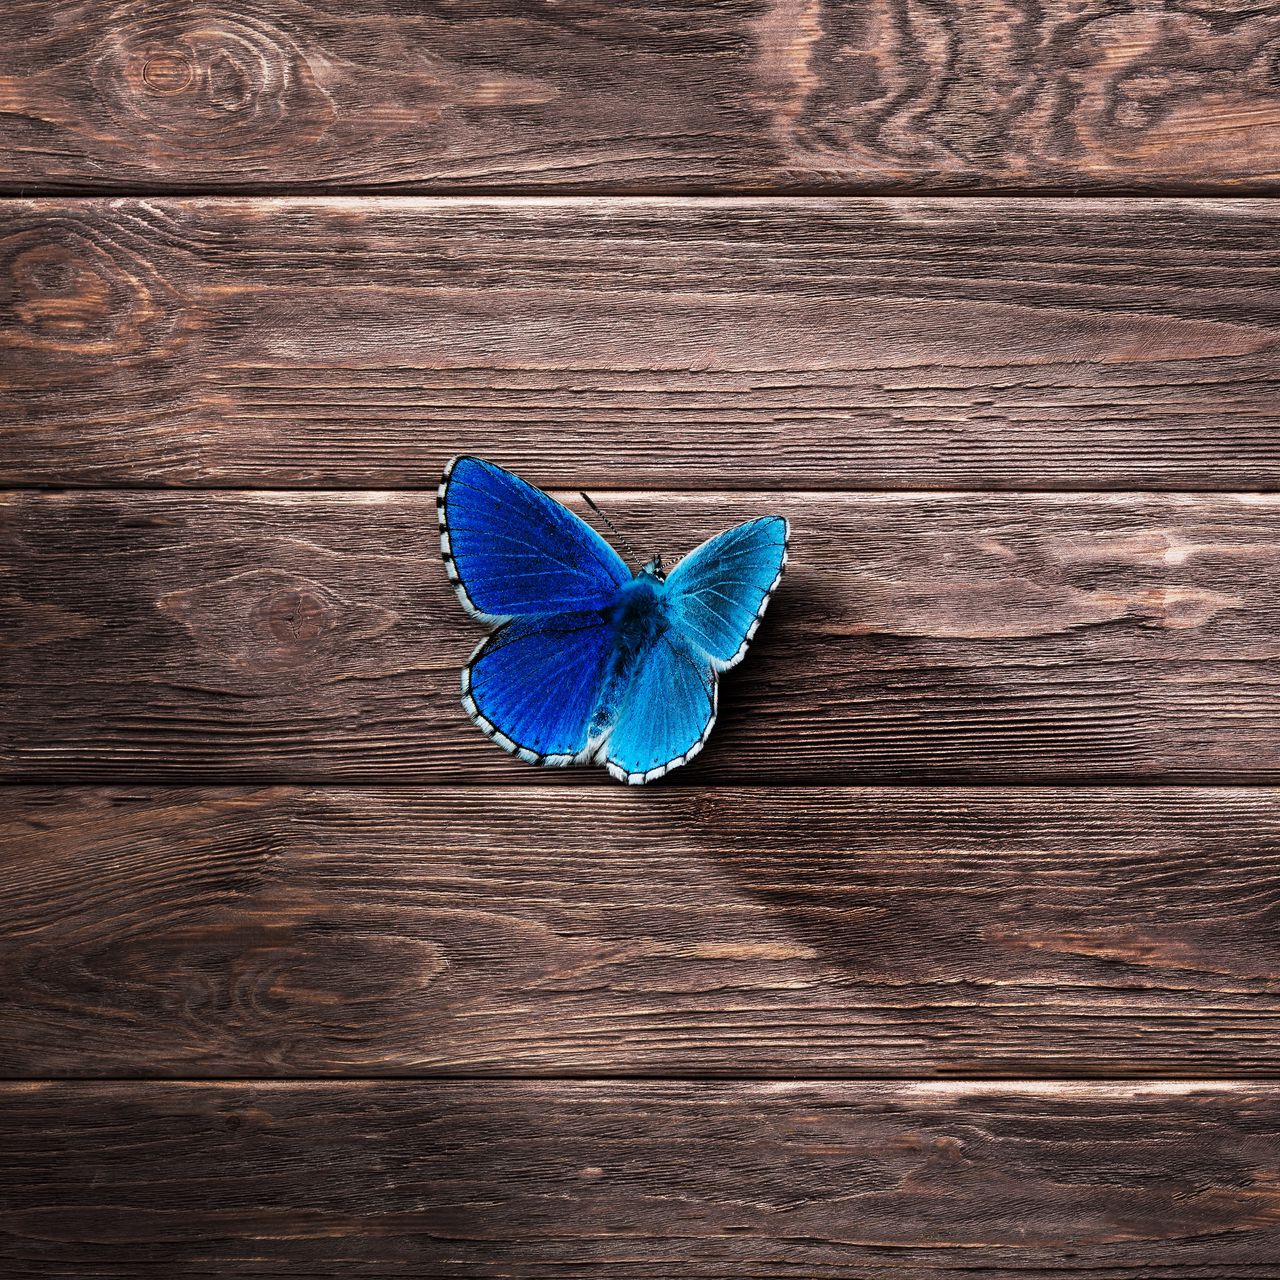 1280x1280 Wallpaper butterfly, surface, wooden